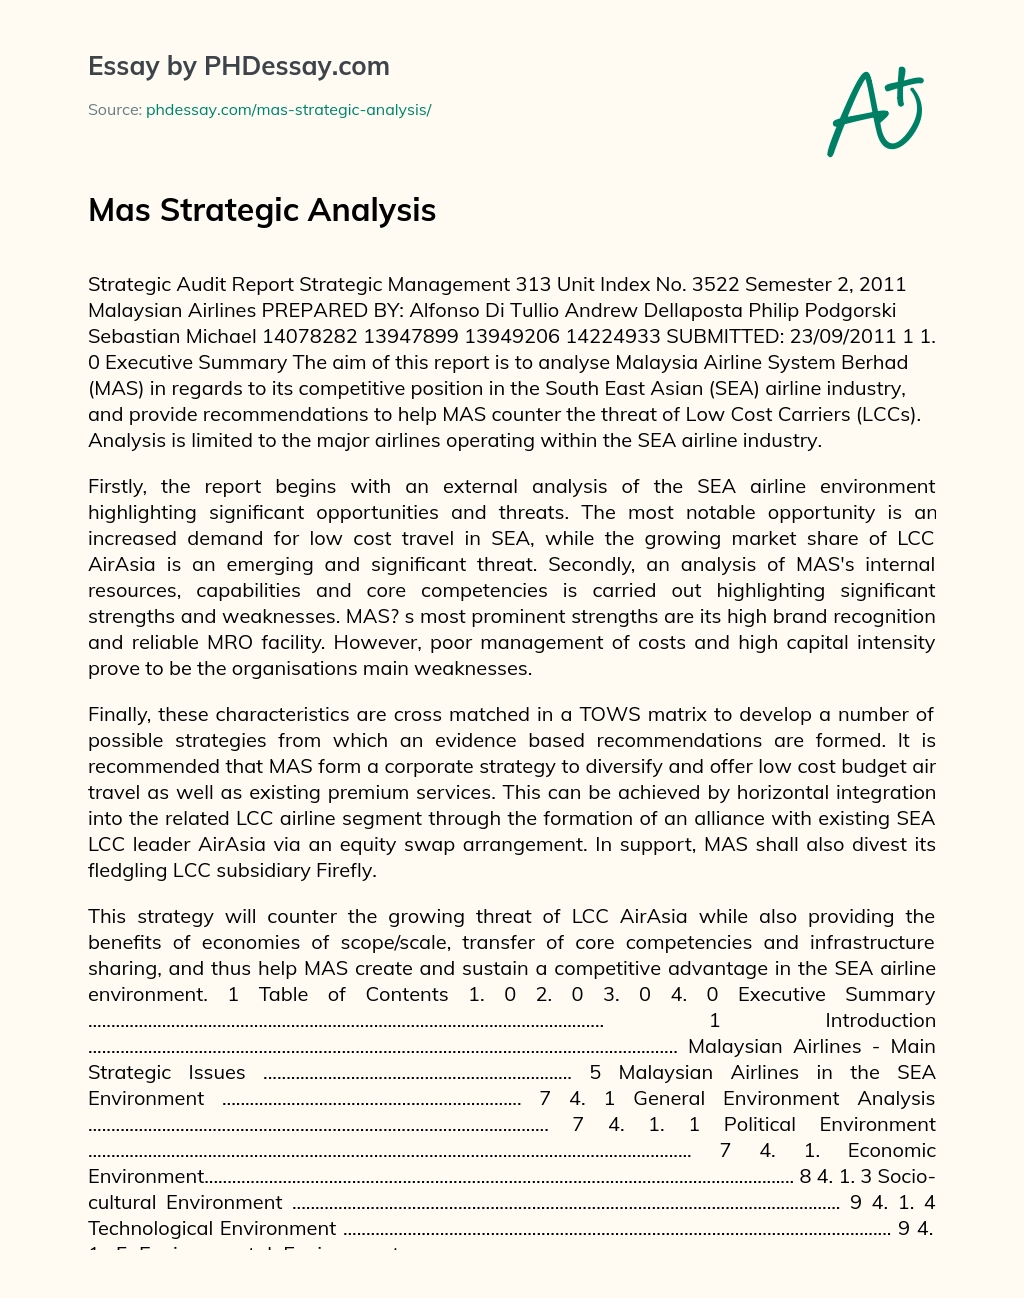 Mas Strategic Analysis essay